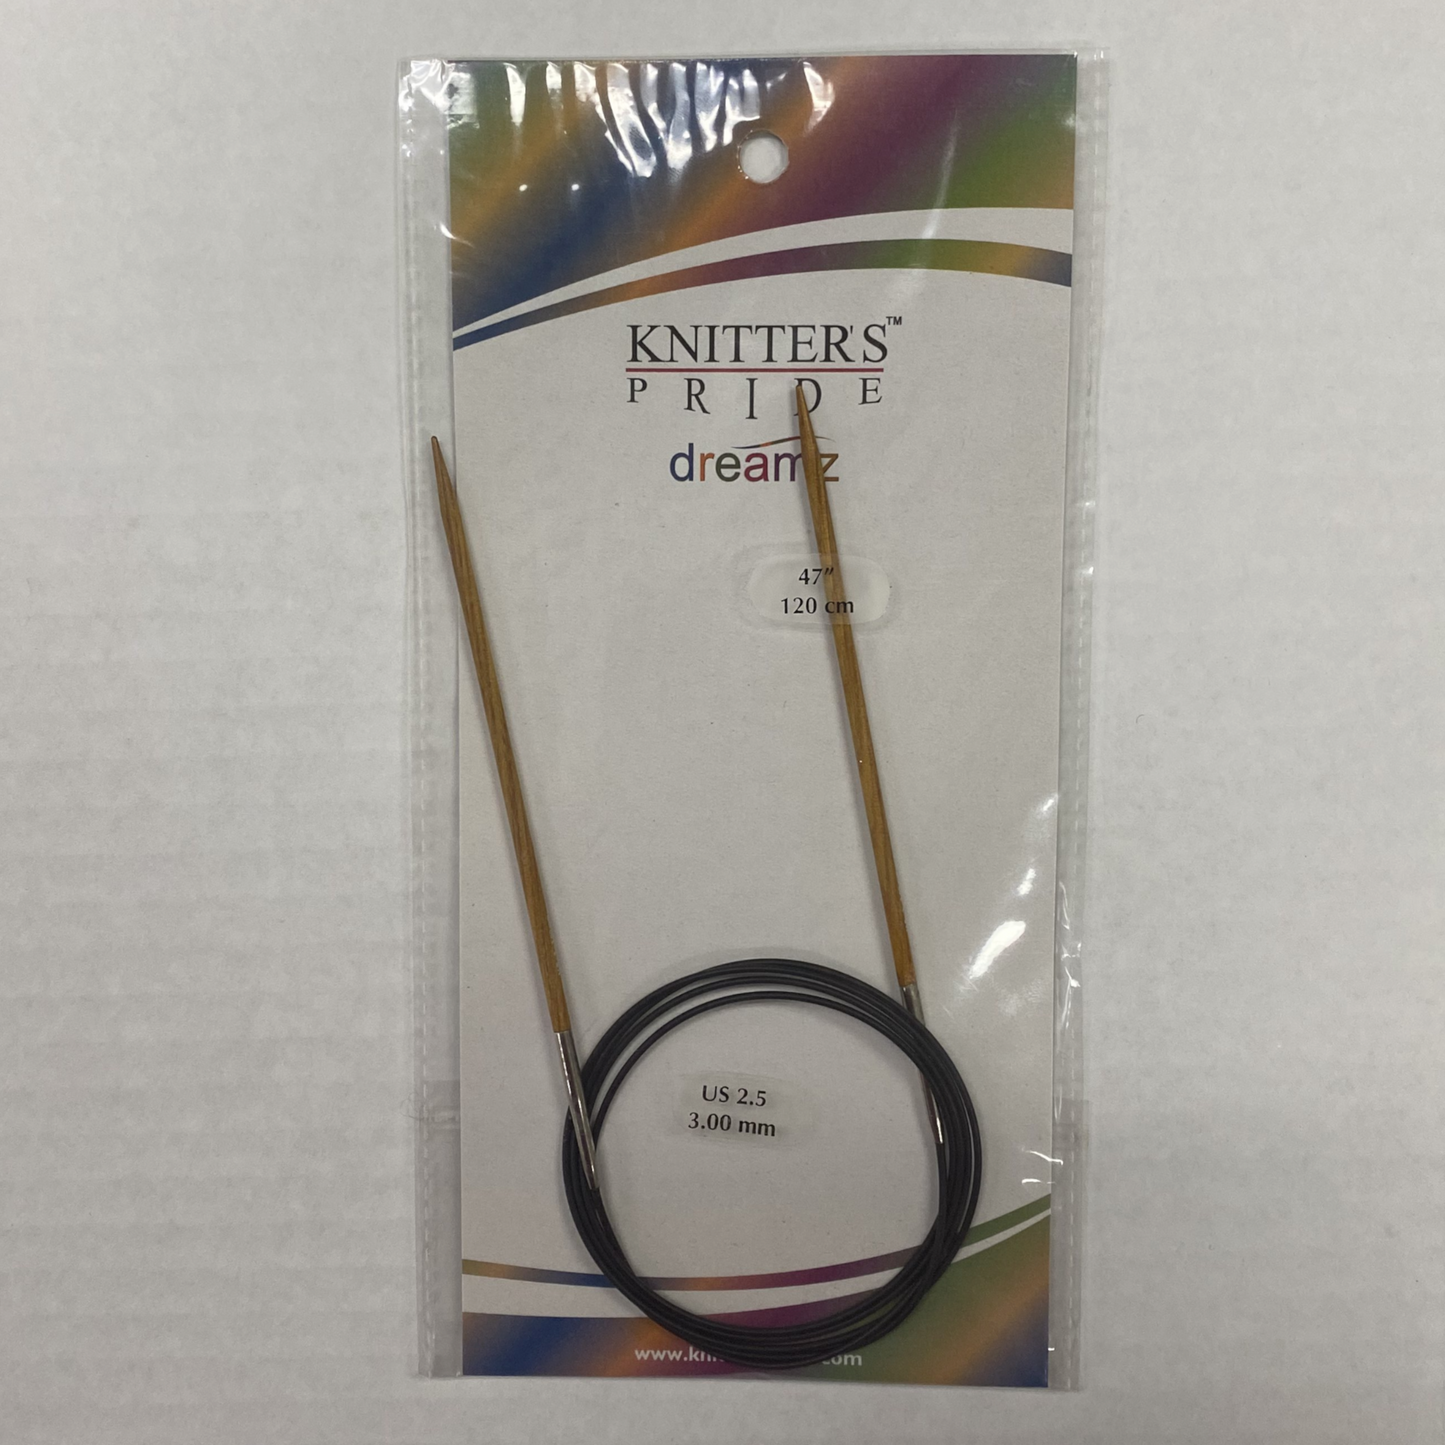 Knitter's Pride - Dreamz - US 2.5 / 3.00mm Fixed Circular Needles